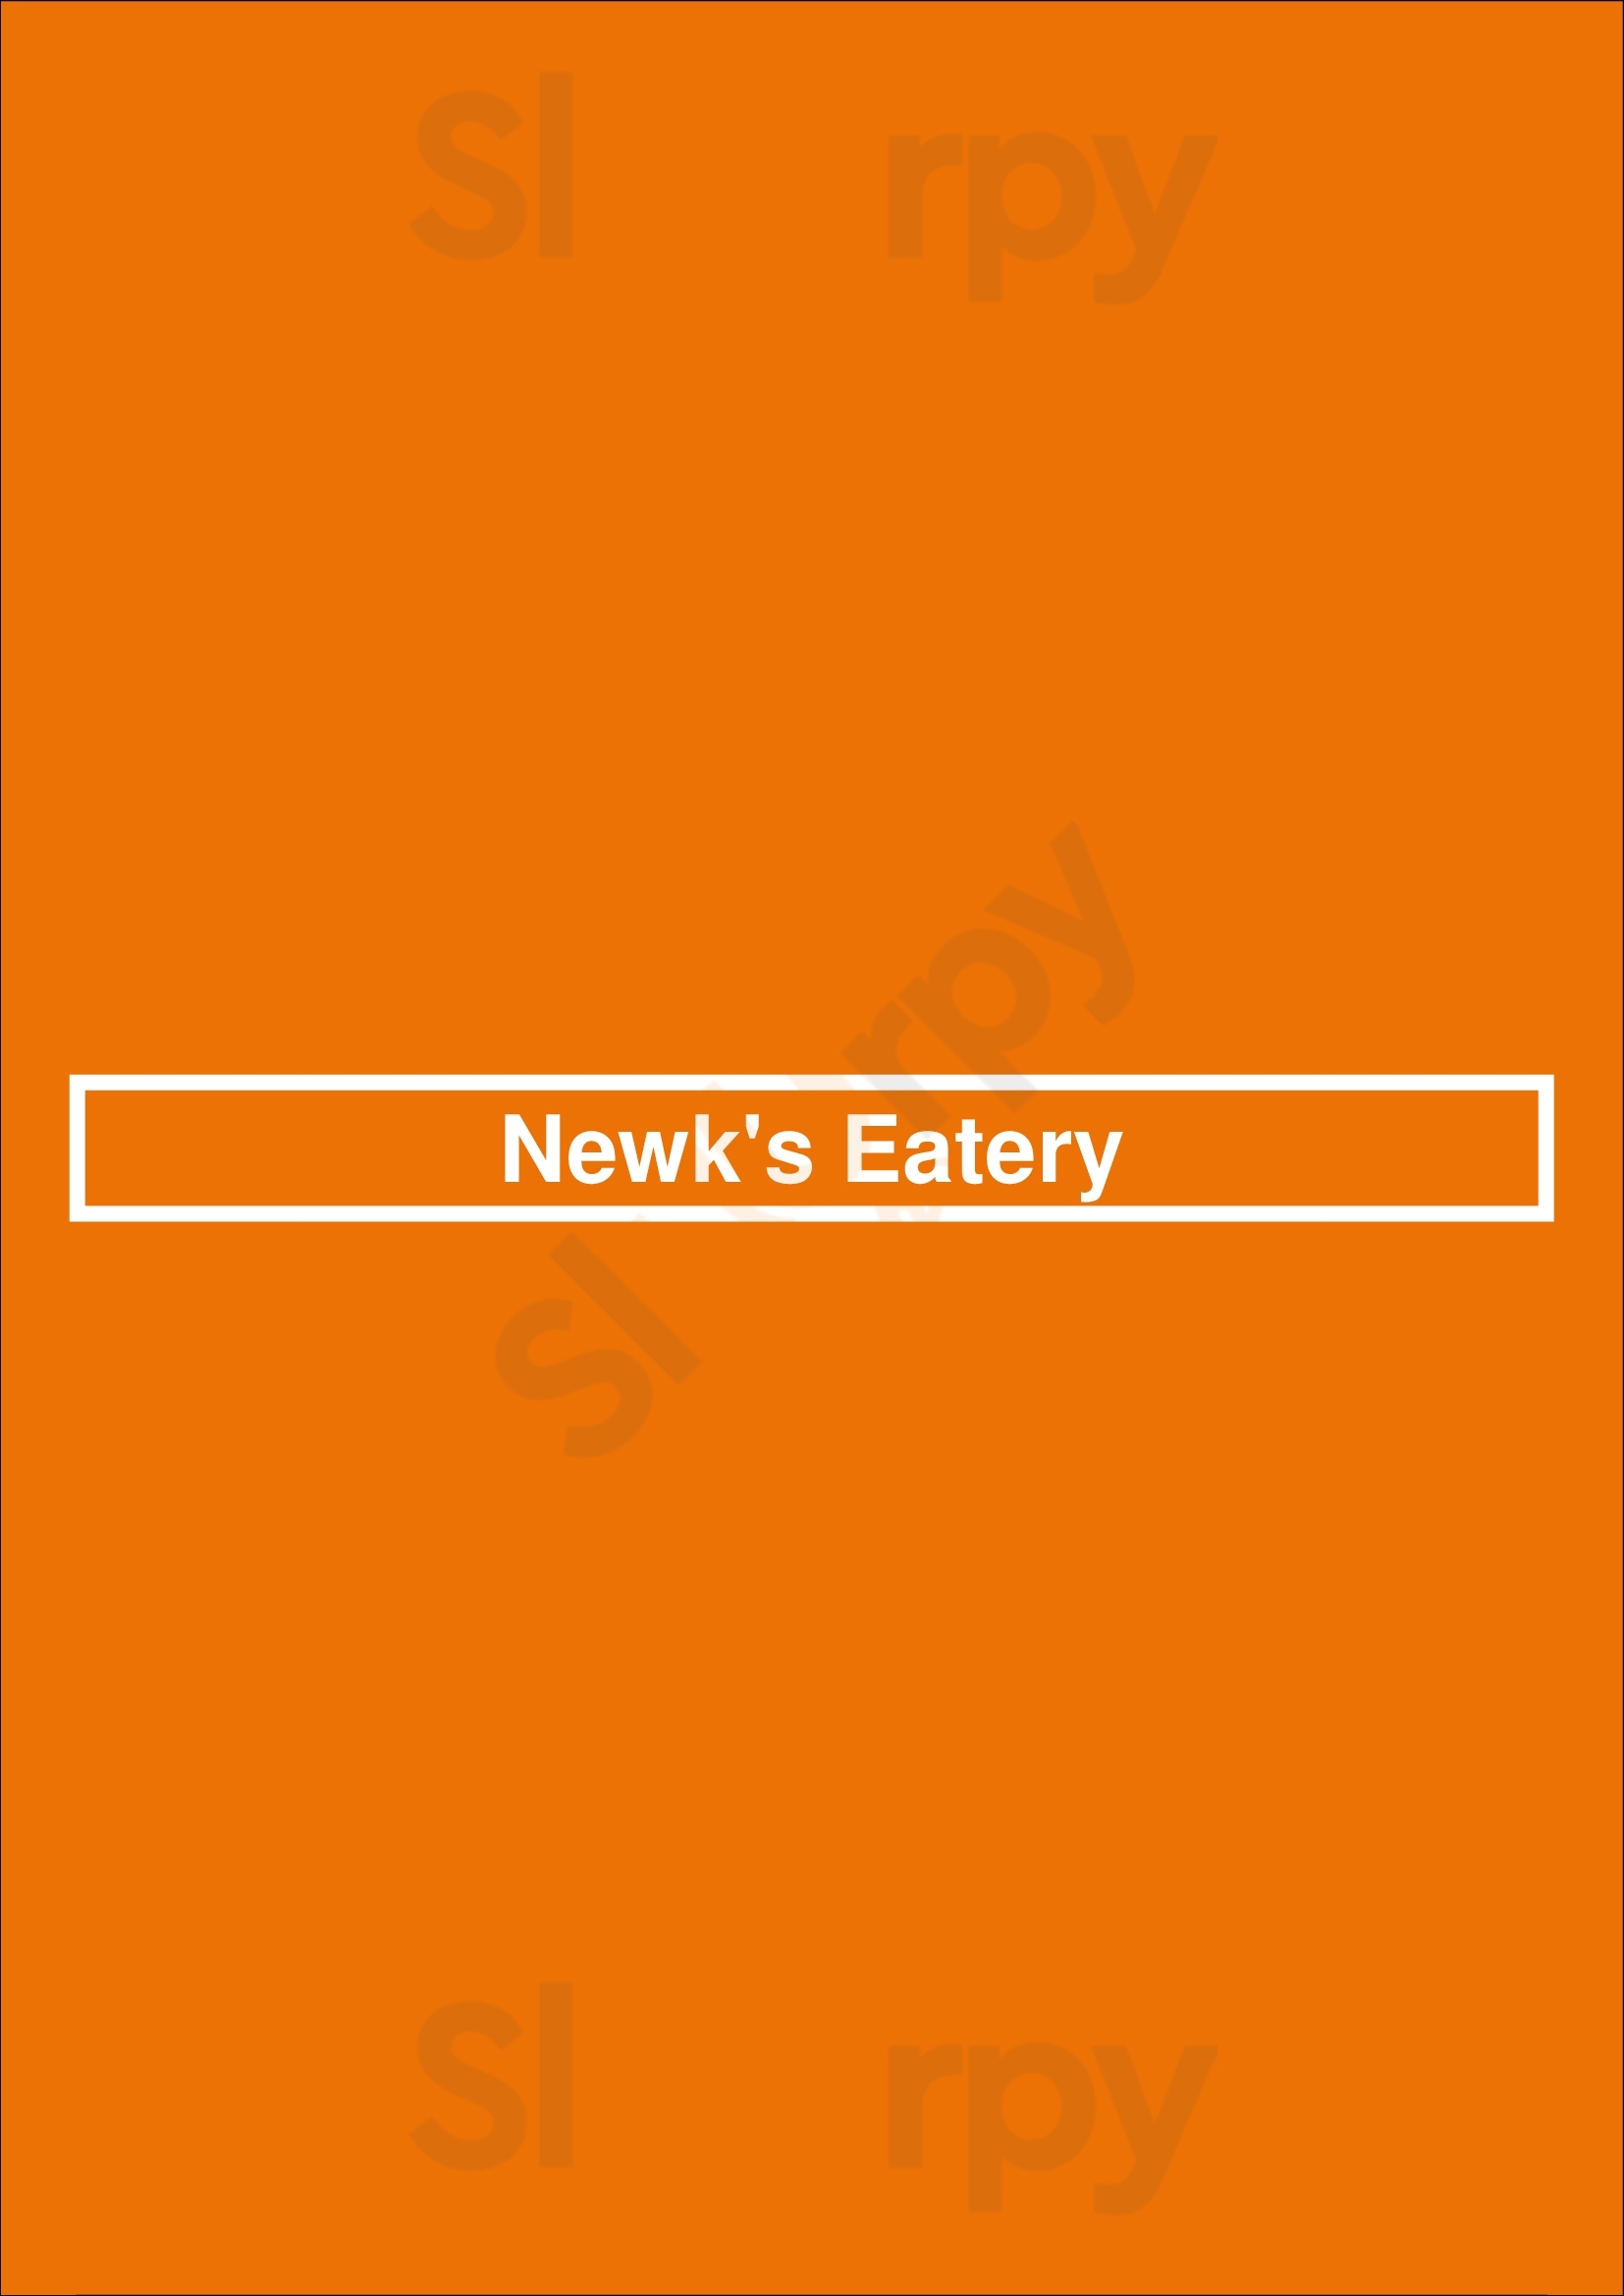 Newk's Eatery Baton Rouge Menu - 1